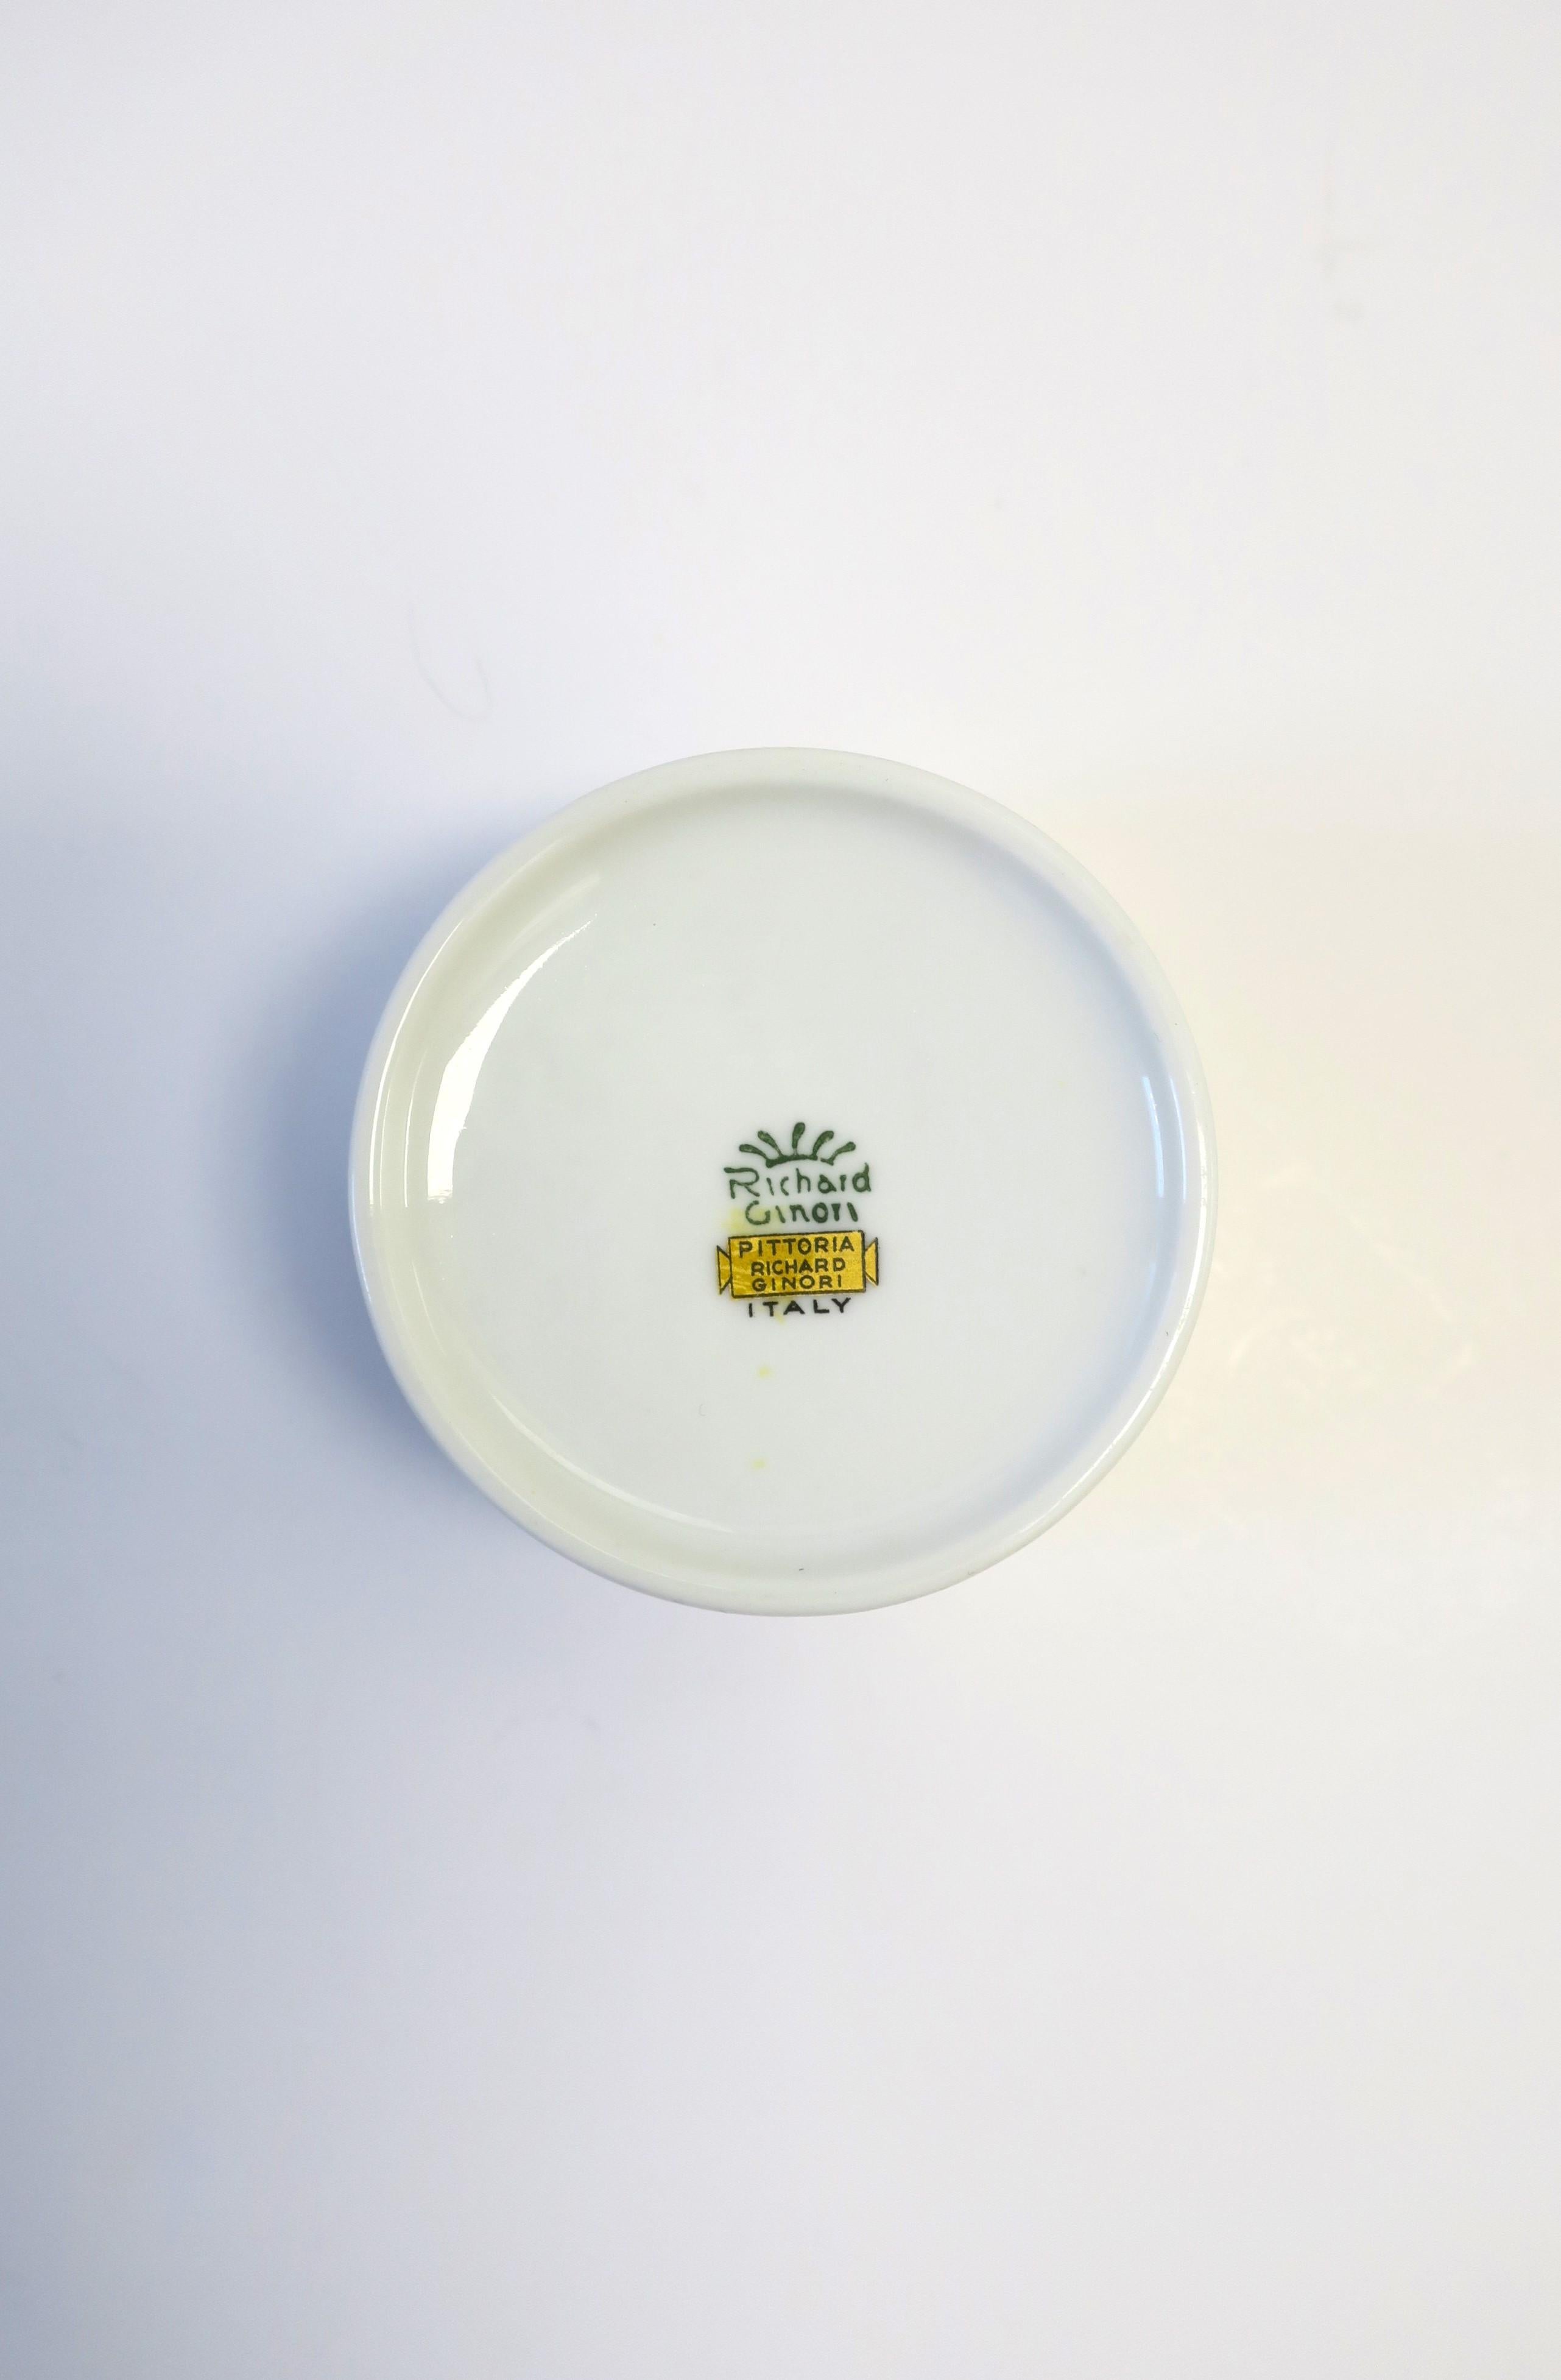 Richard Ginori White Porcelain & Gold Italian Jewelry Dish or Vessel For Sale 10